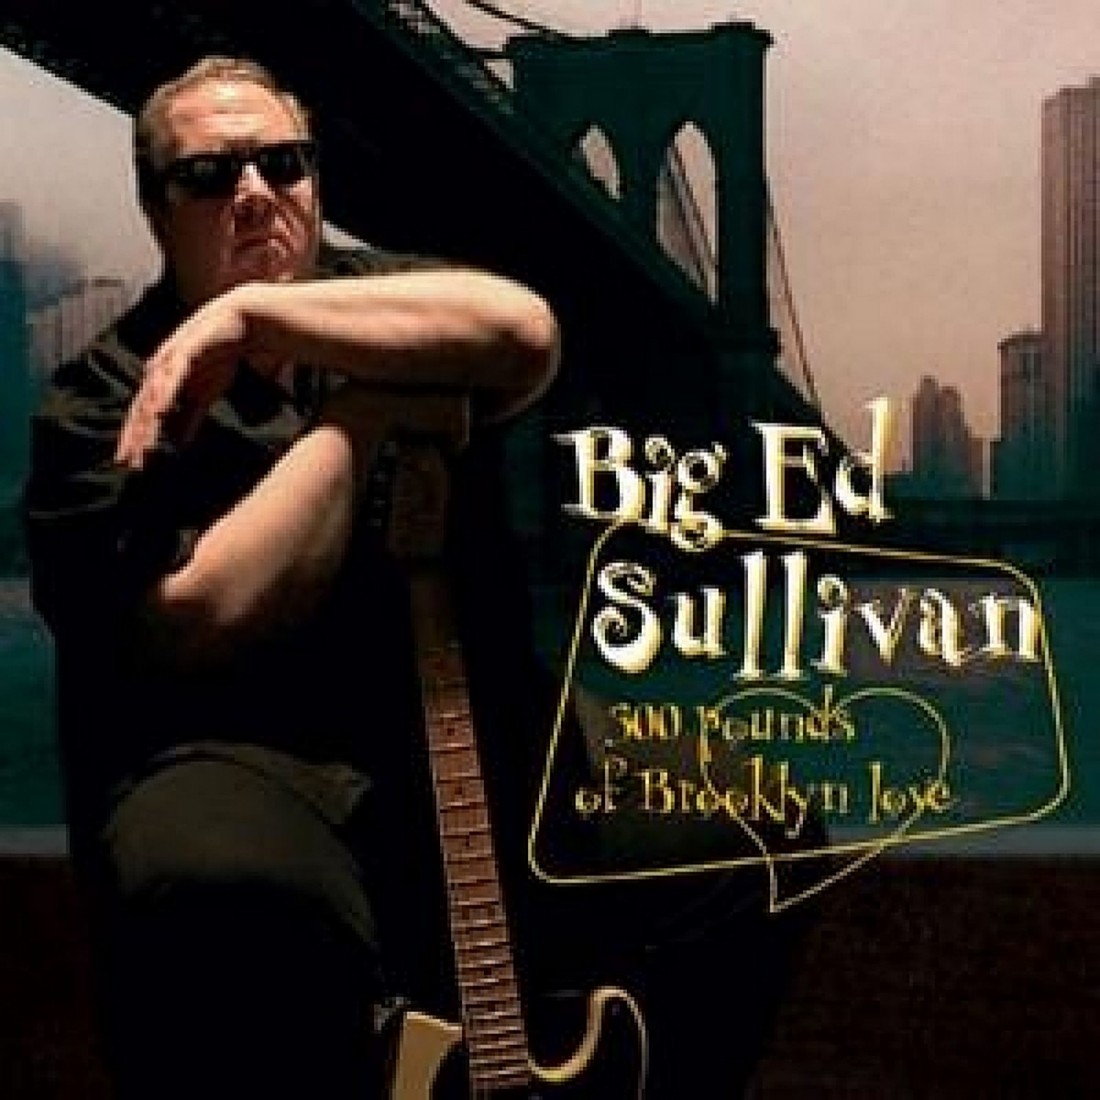 Big ed Sullivan